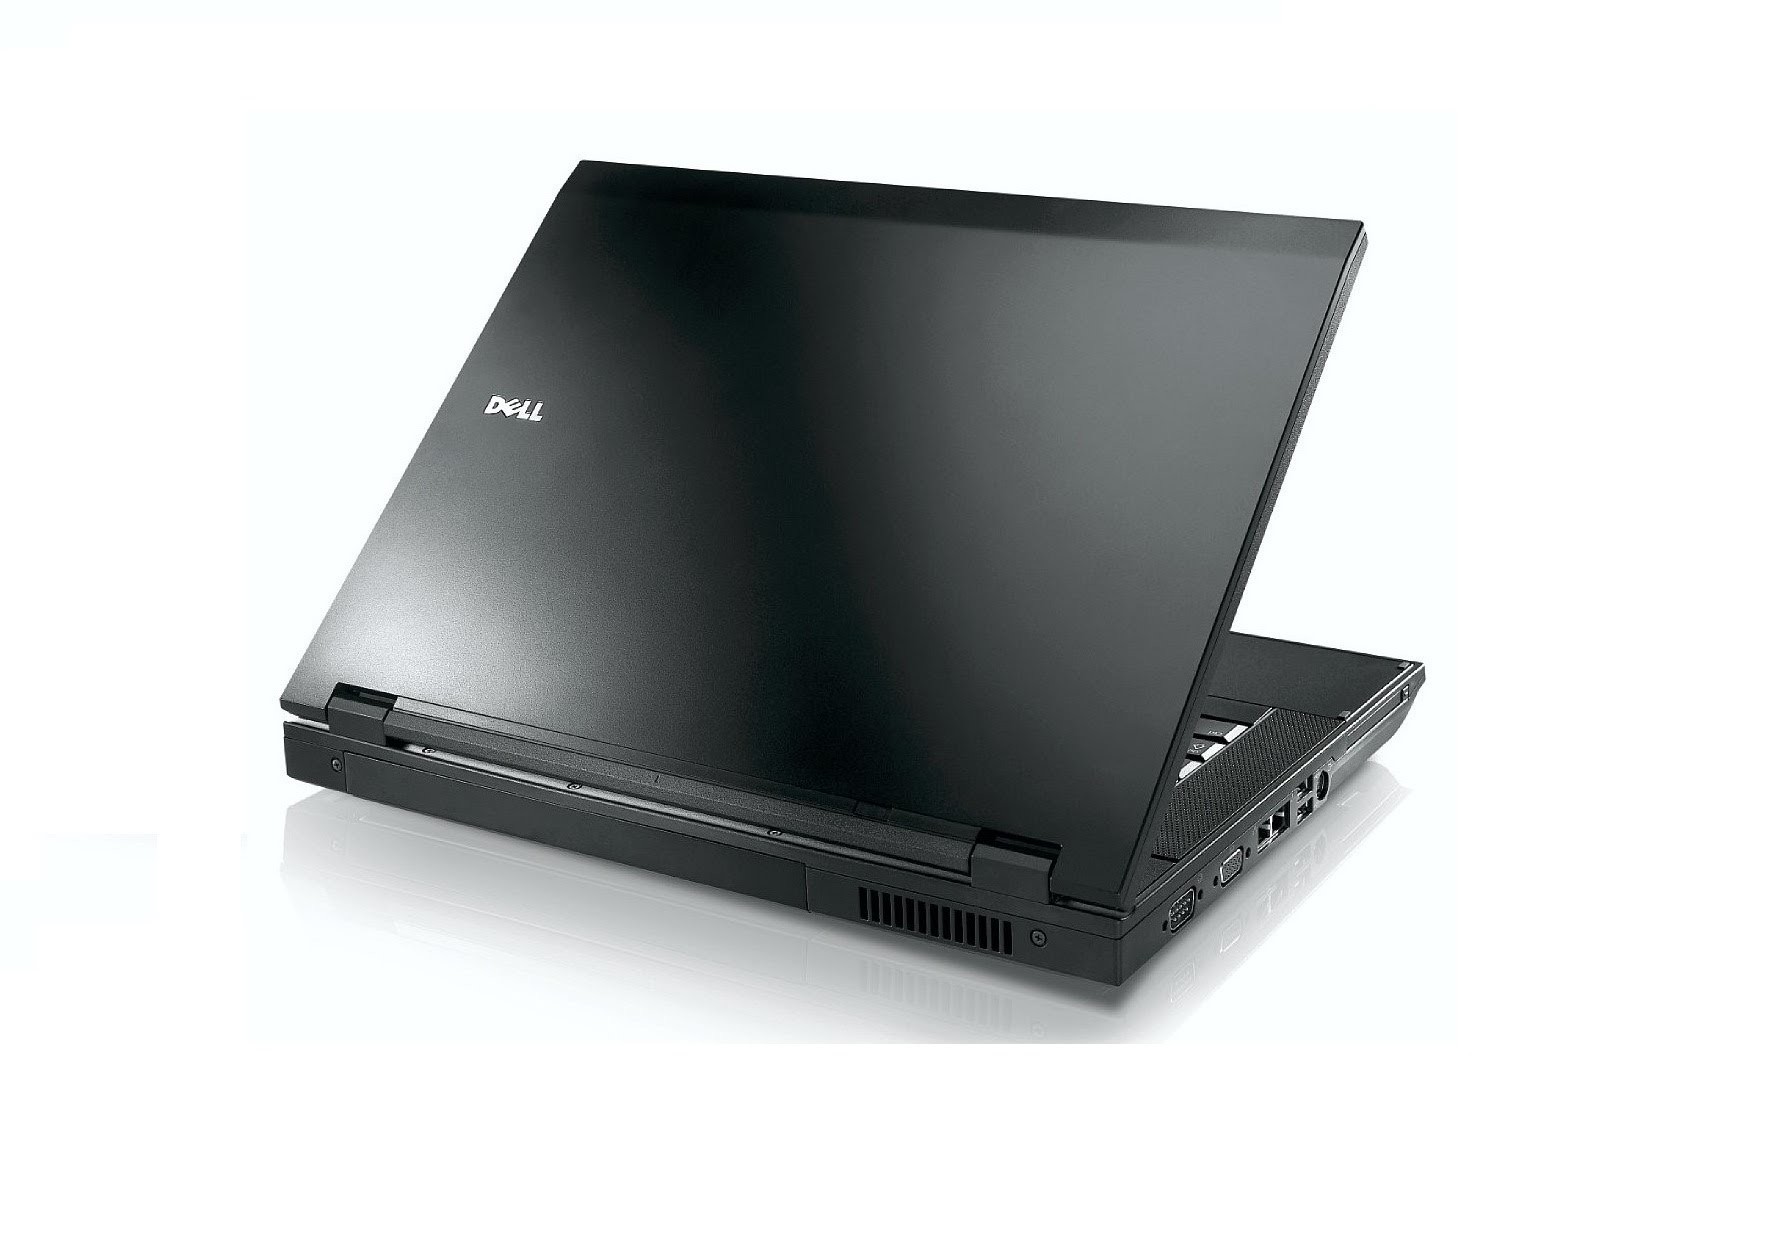 Dell Latitude E5500 - Memory - Upgrade - How To - Tutorial - DIY